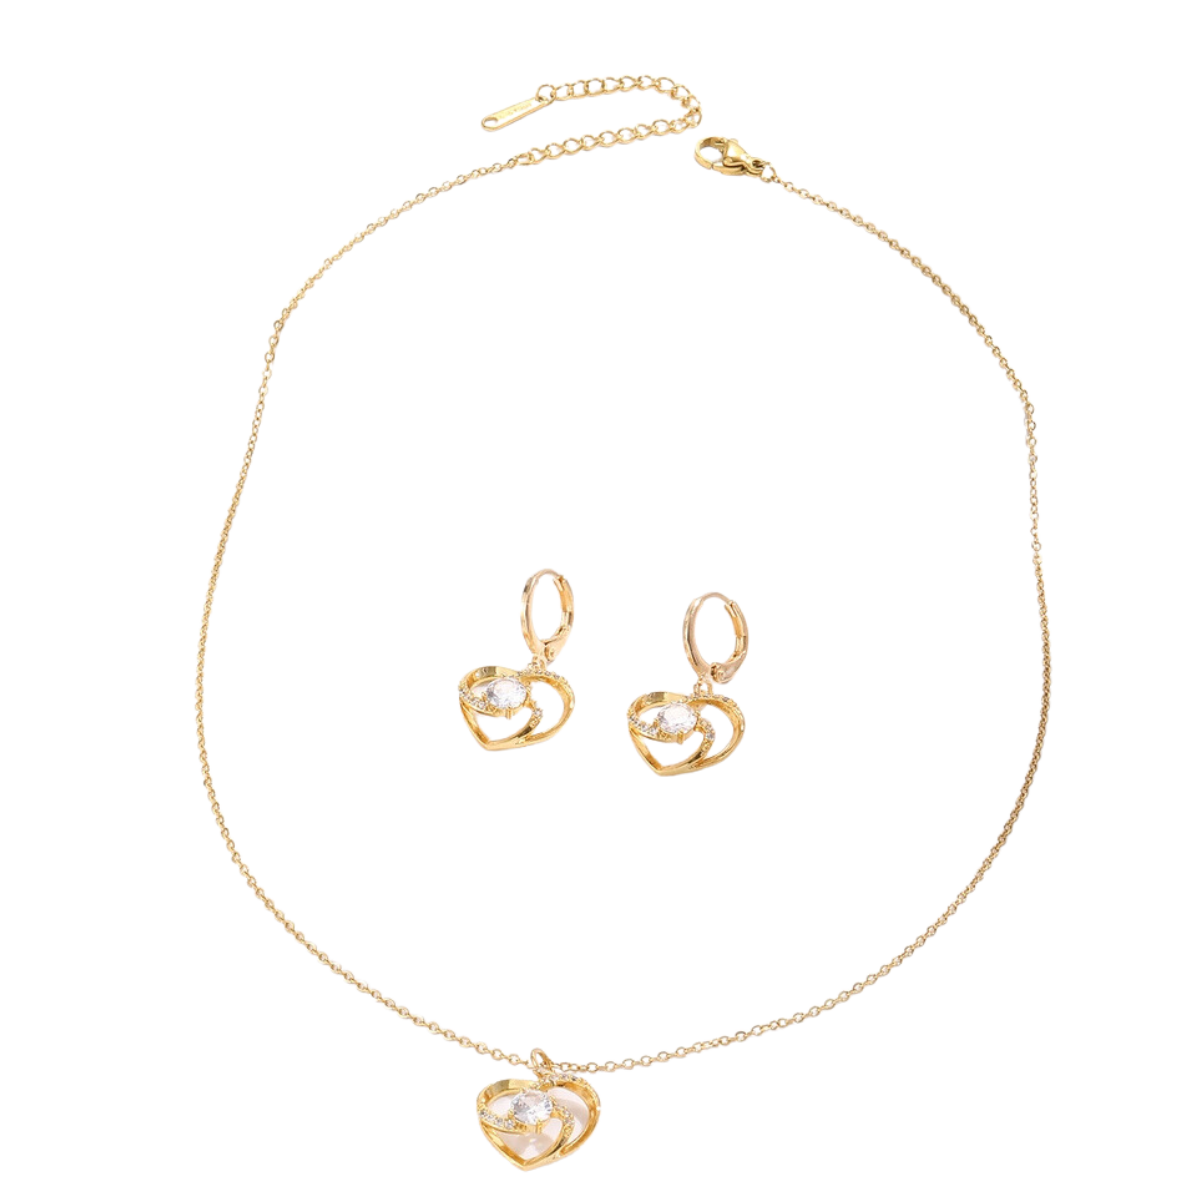 10pcs - Gold Tone Crystal Heart Windmill Earrings and Necklace Set|GCJ420|UK seller